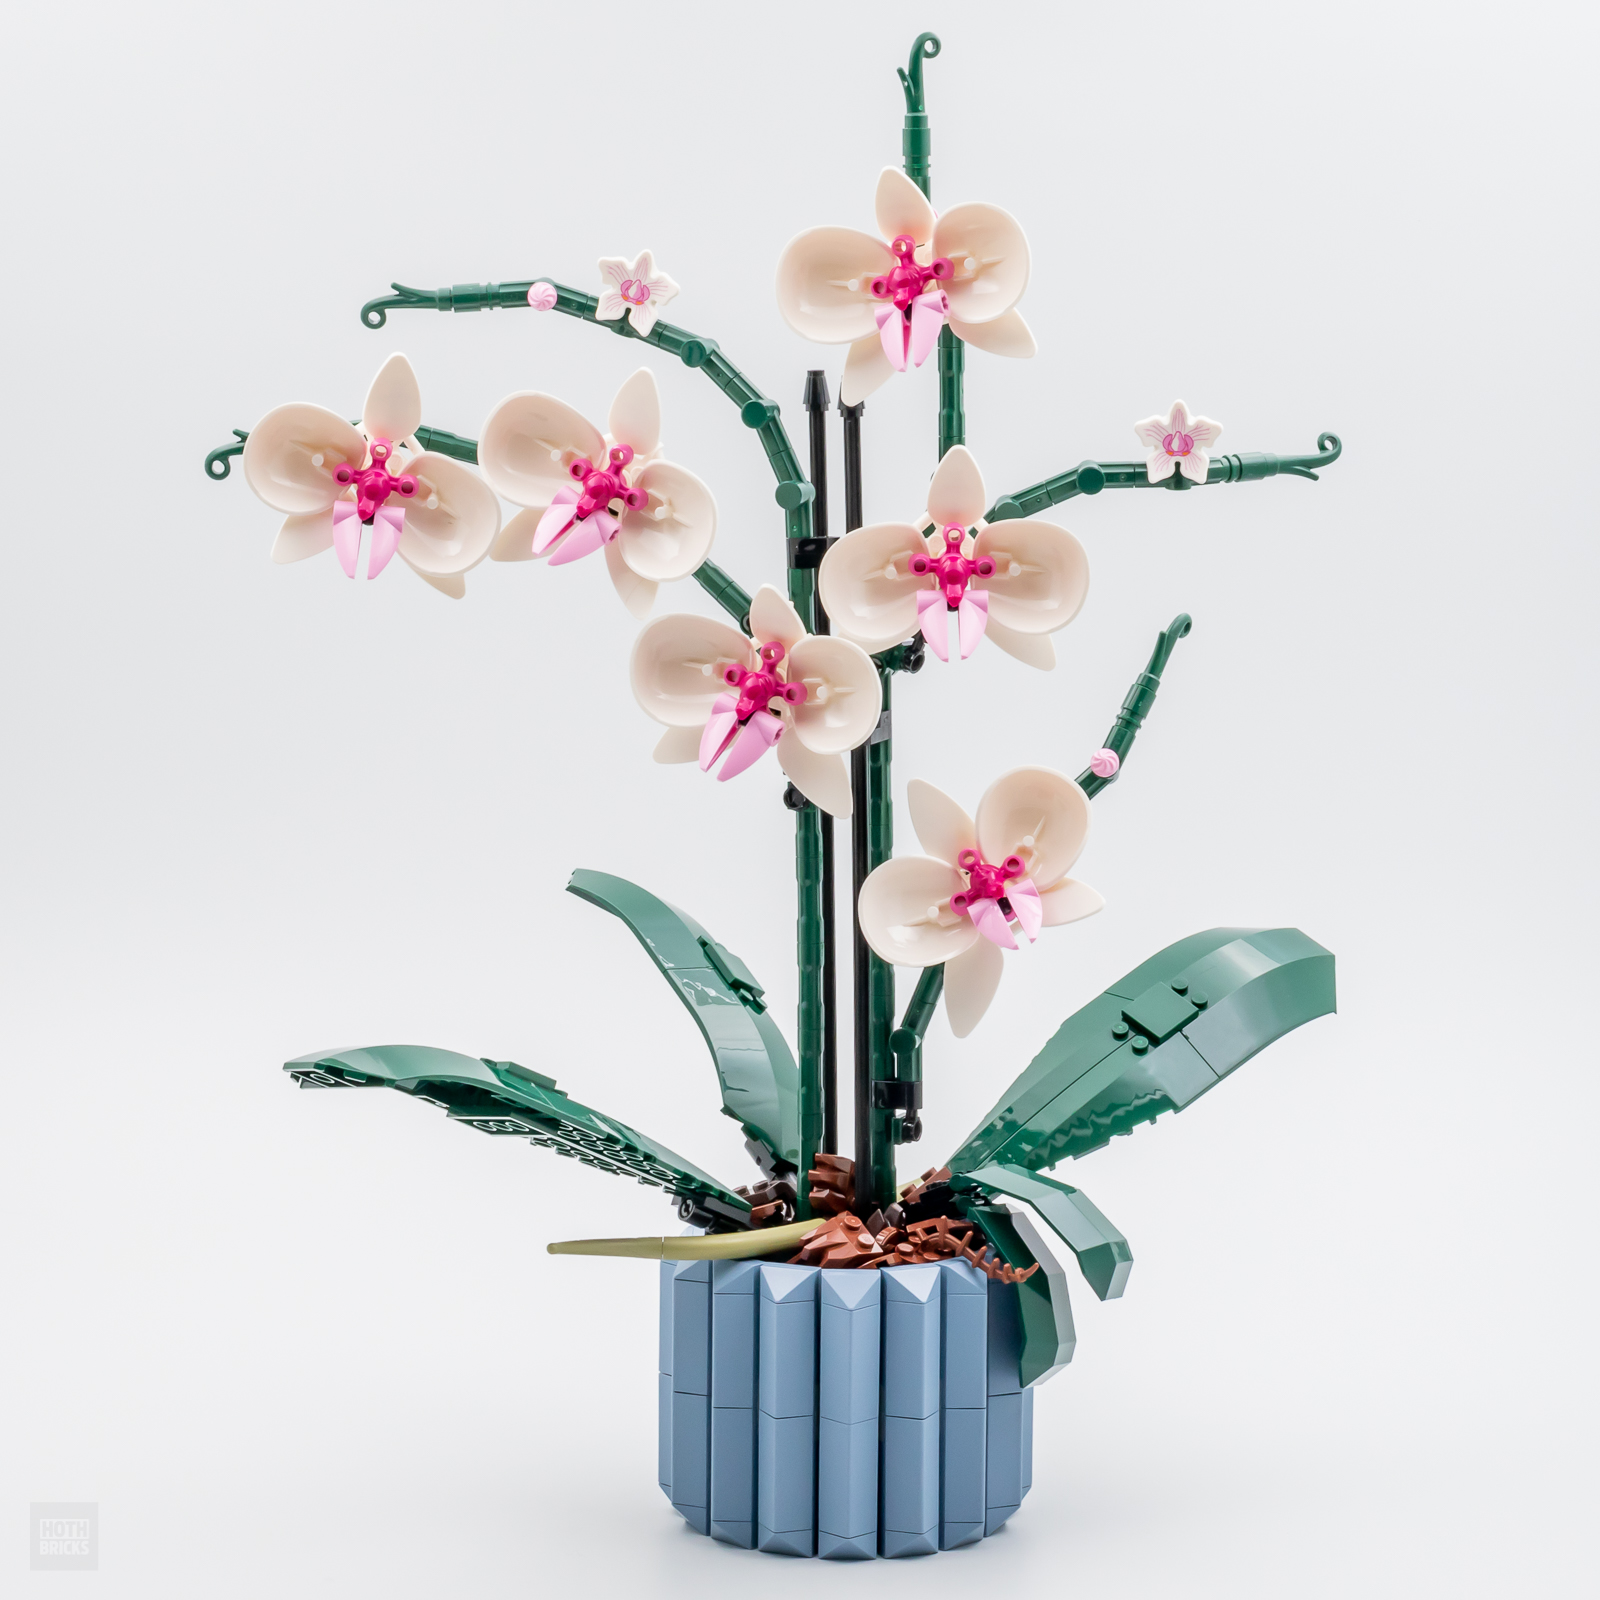 Testato molto rapidamente: LEGO Botanical Collection 10311 Orchid ...